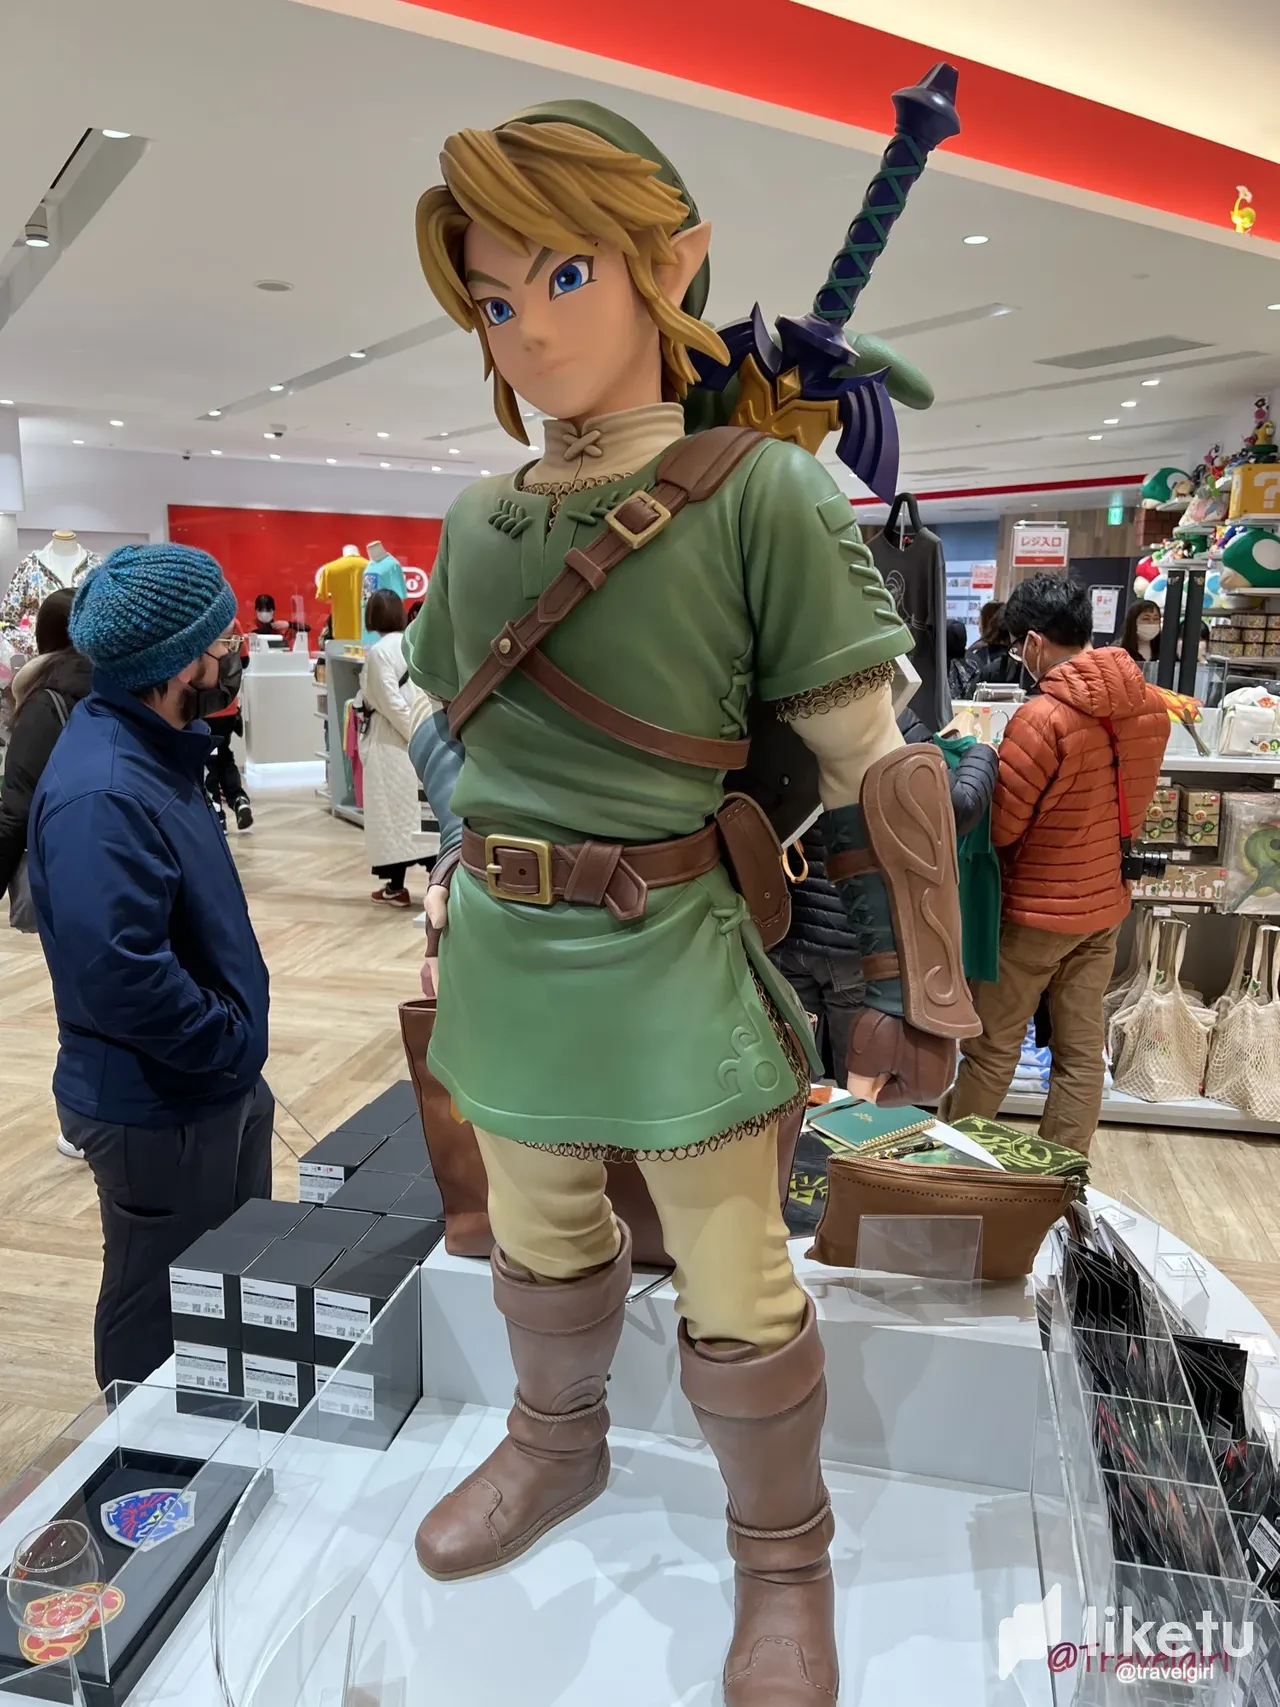 Nintendo Store - GaijinPot Travel